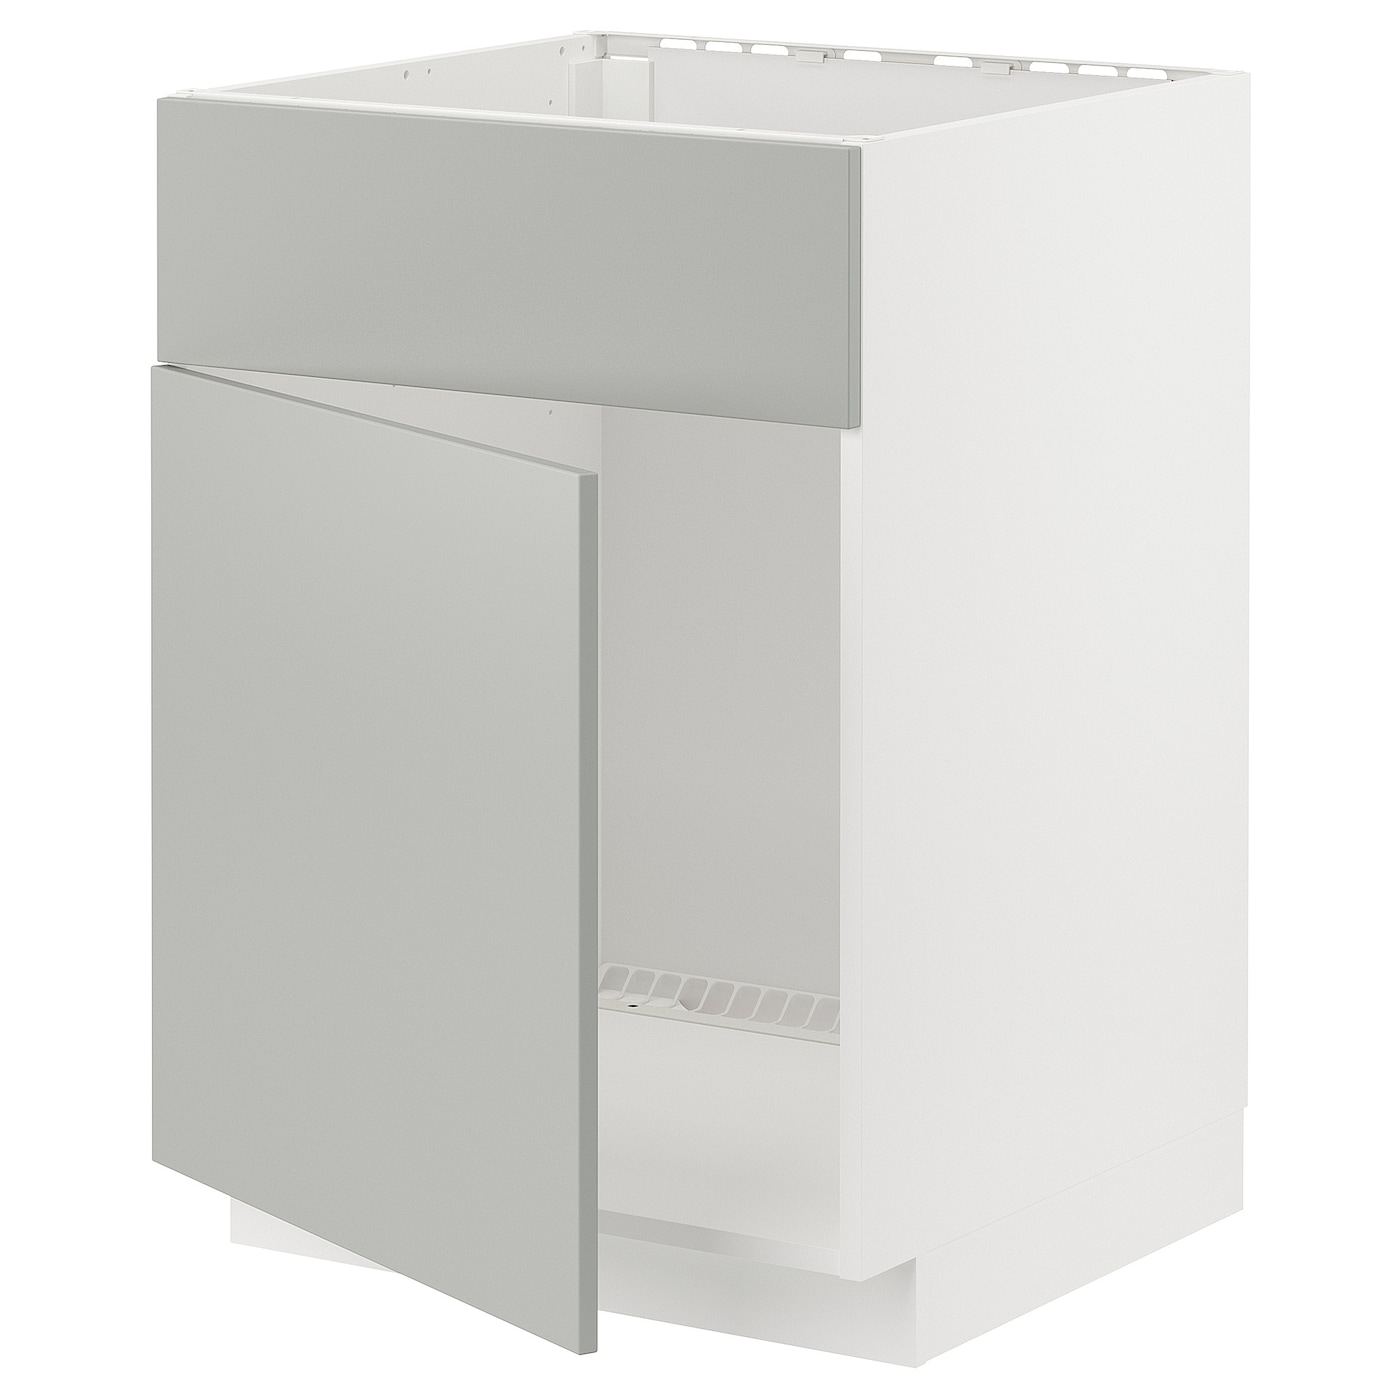 Напольный шкаф - METOD IKEA/ МЕТОД ИКЕА,  88х60 см, белый/светло-серый